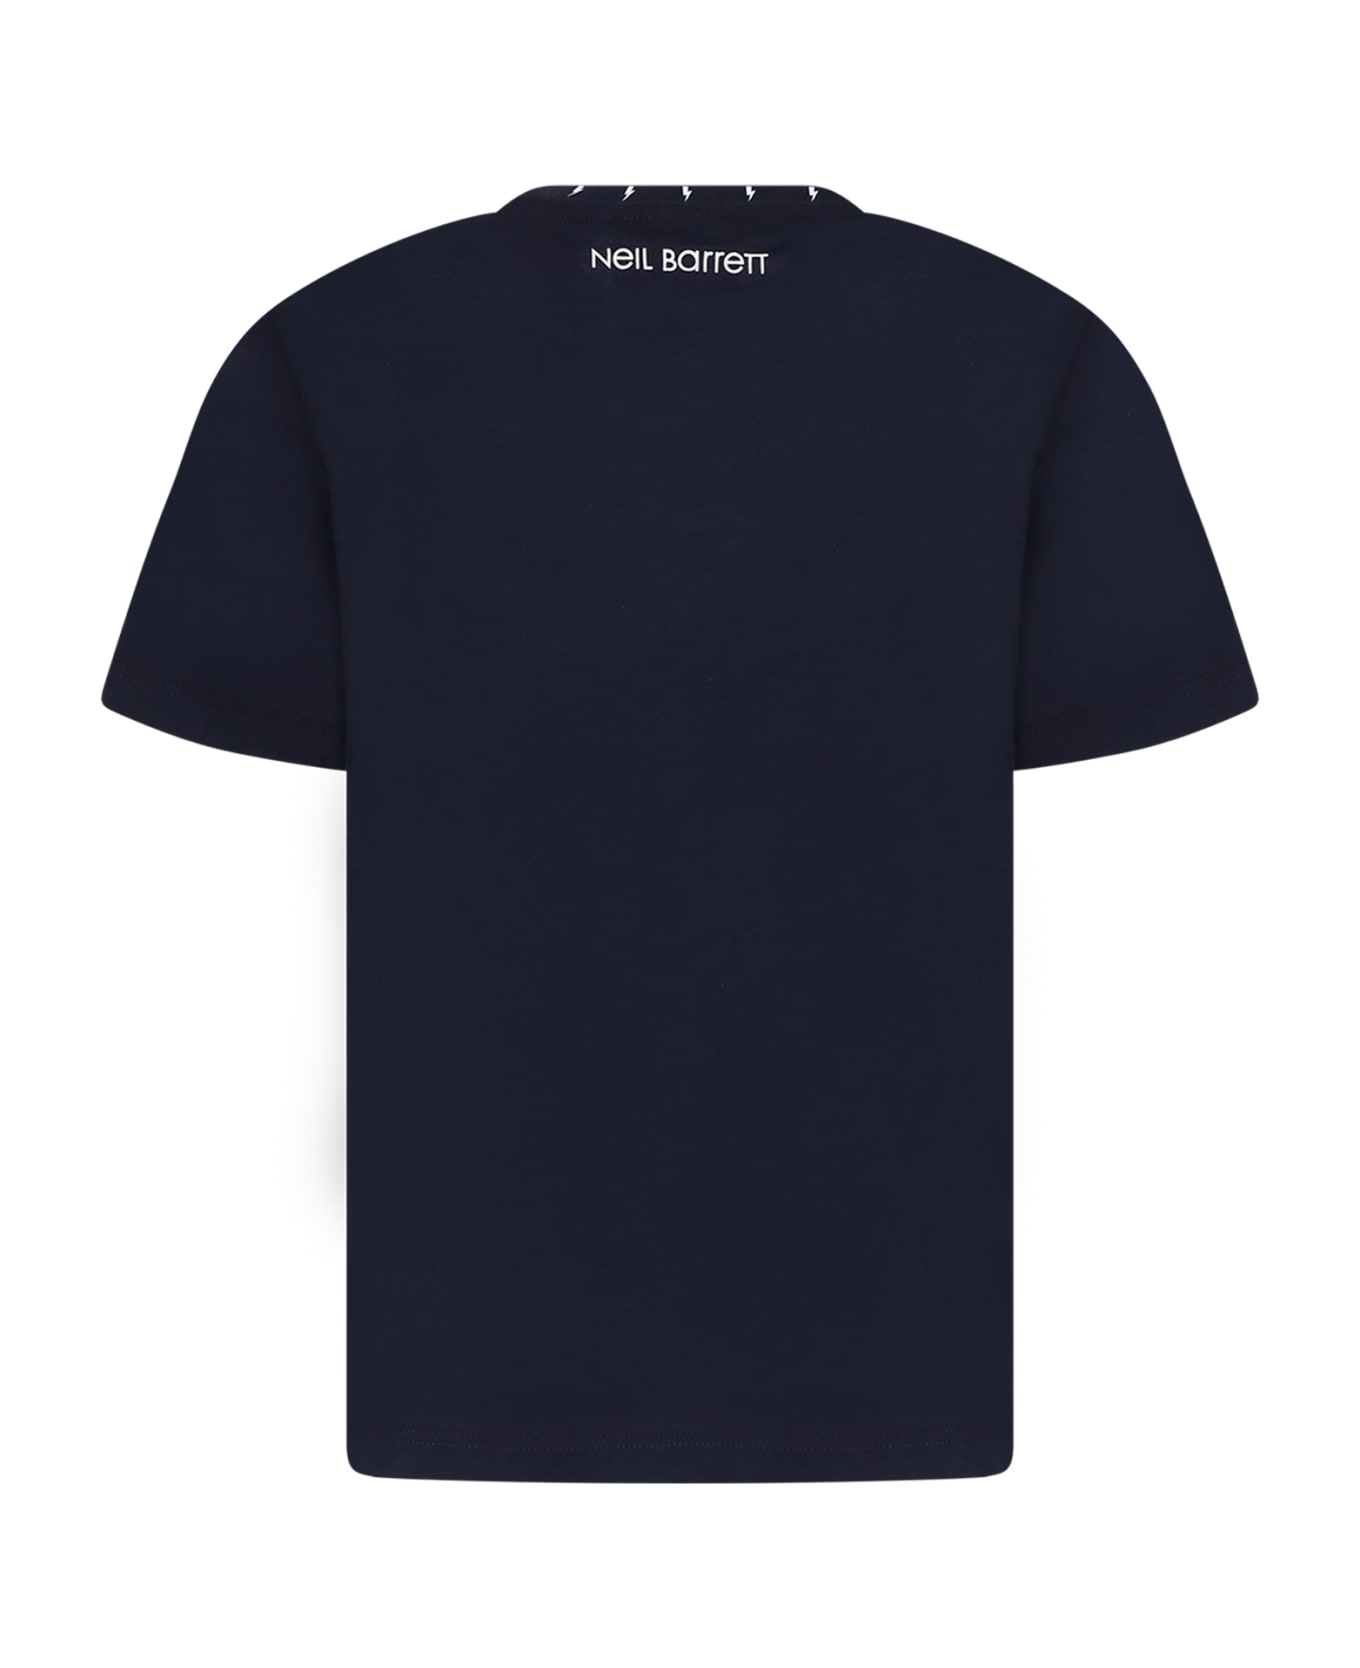 Neil Barrett Blue T-shirt Gor Boy With Iconic Lightning Bolts And Logo - Blue